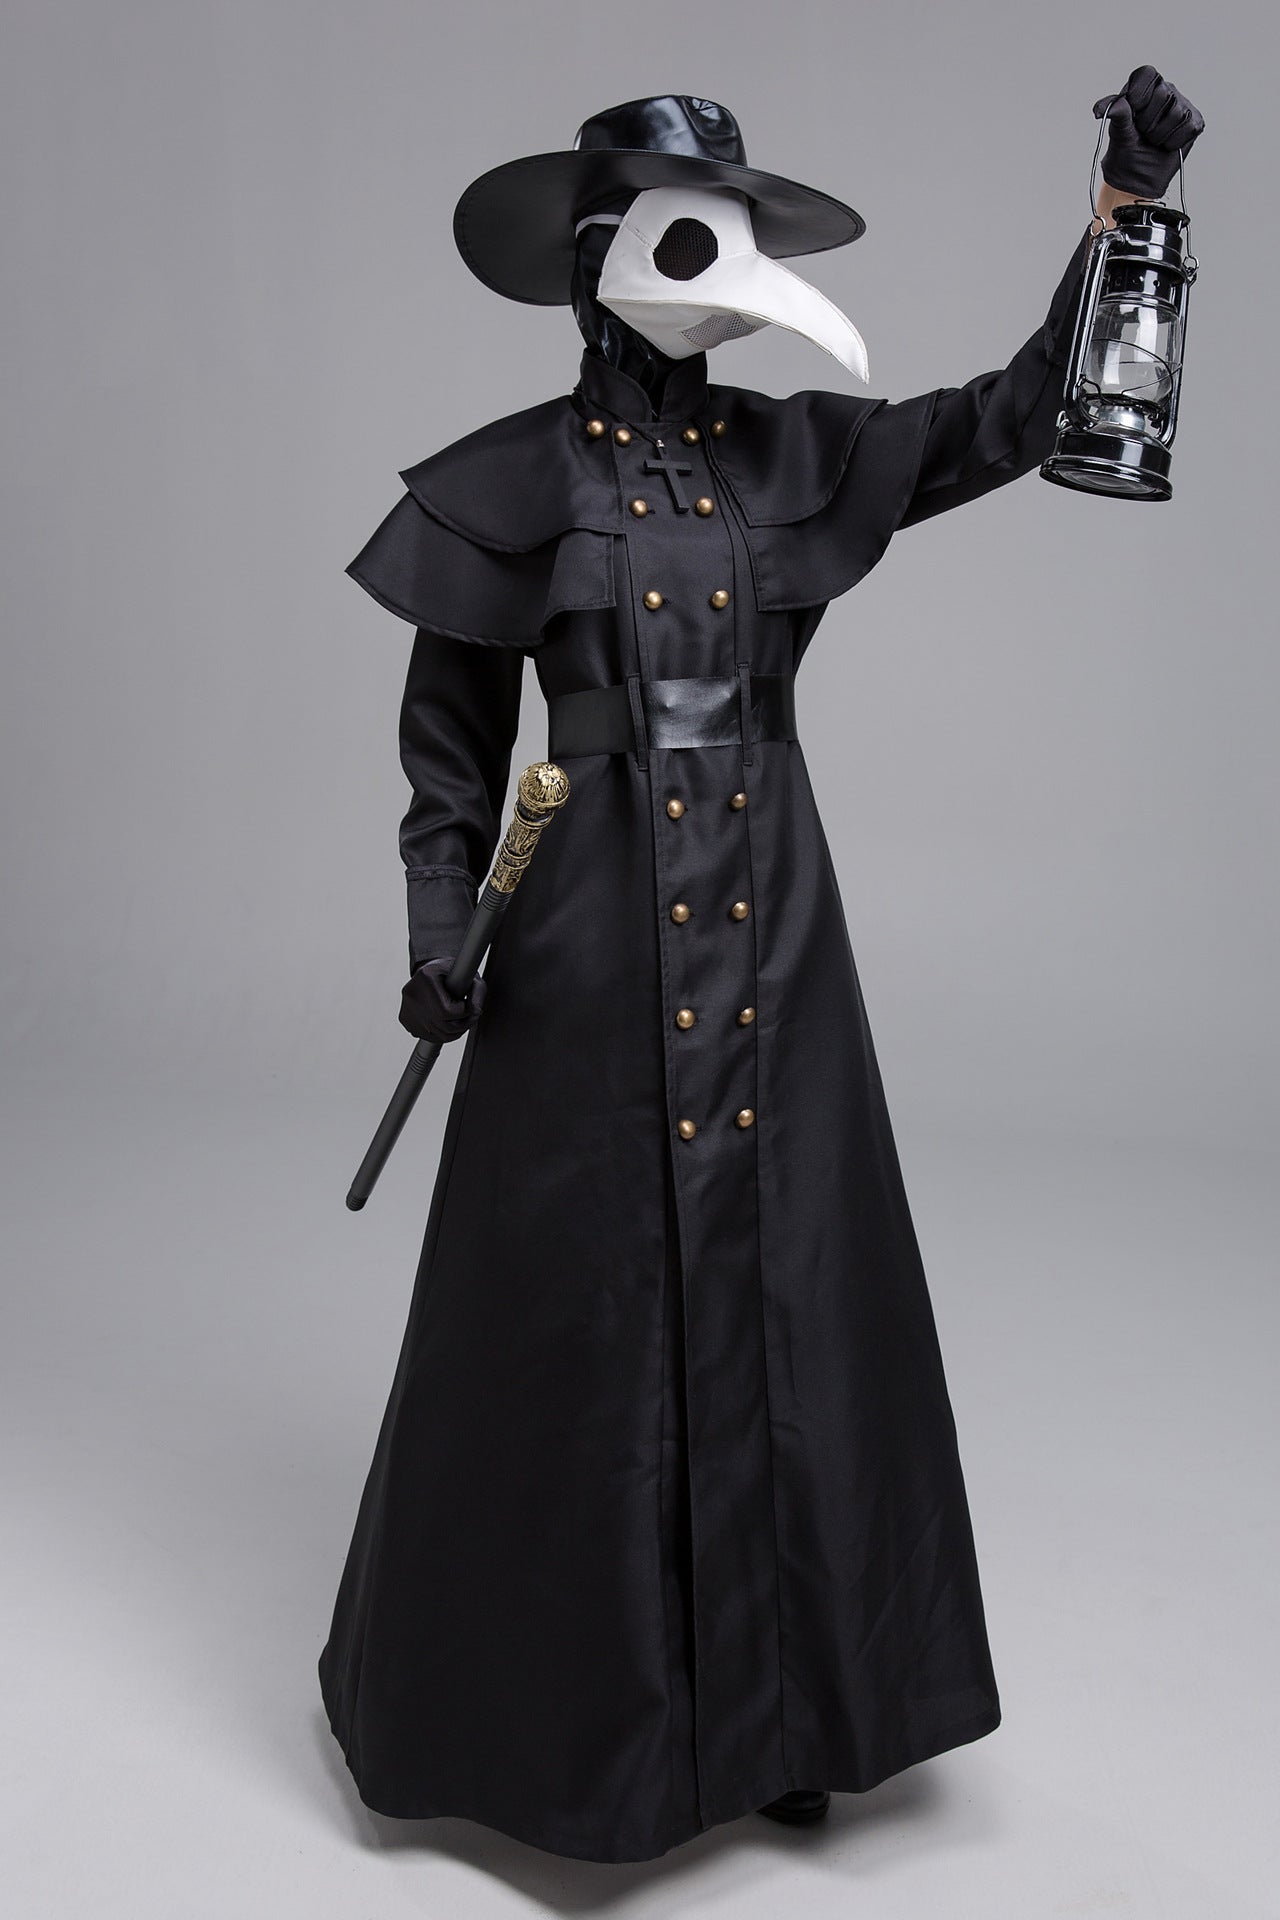 Gvavaya Cosplay Medieval Steampunk Style Plague Doctor Costume Doctor Schnabel Beak Crow Mask Costume Halloween Cosplay Costume